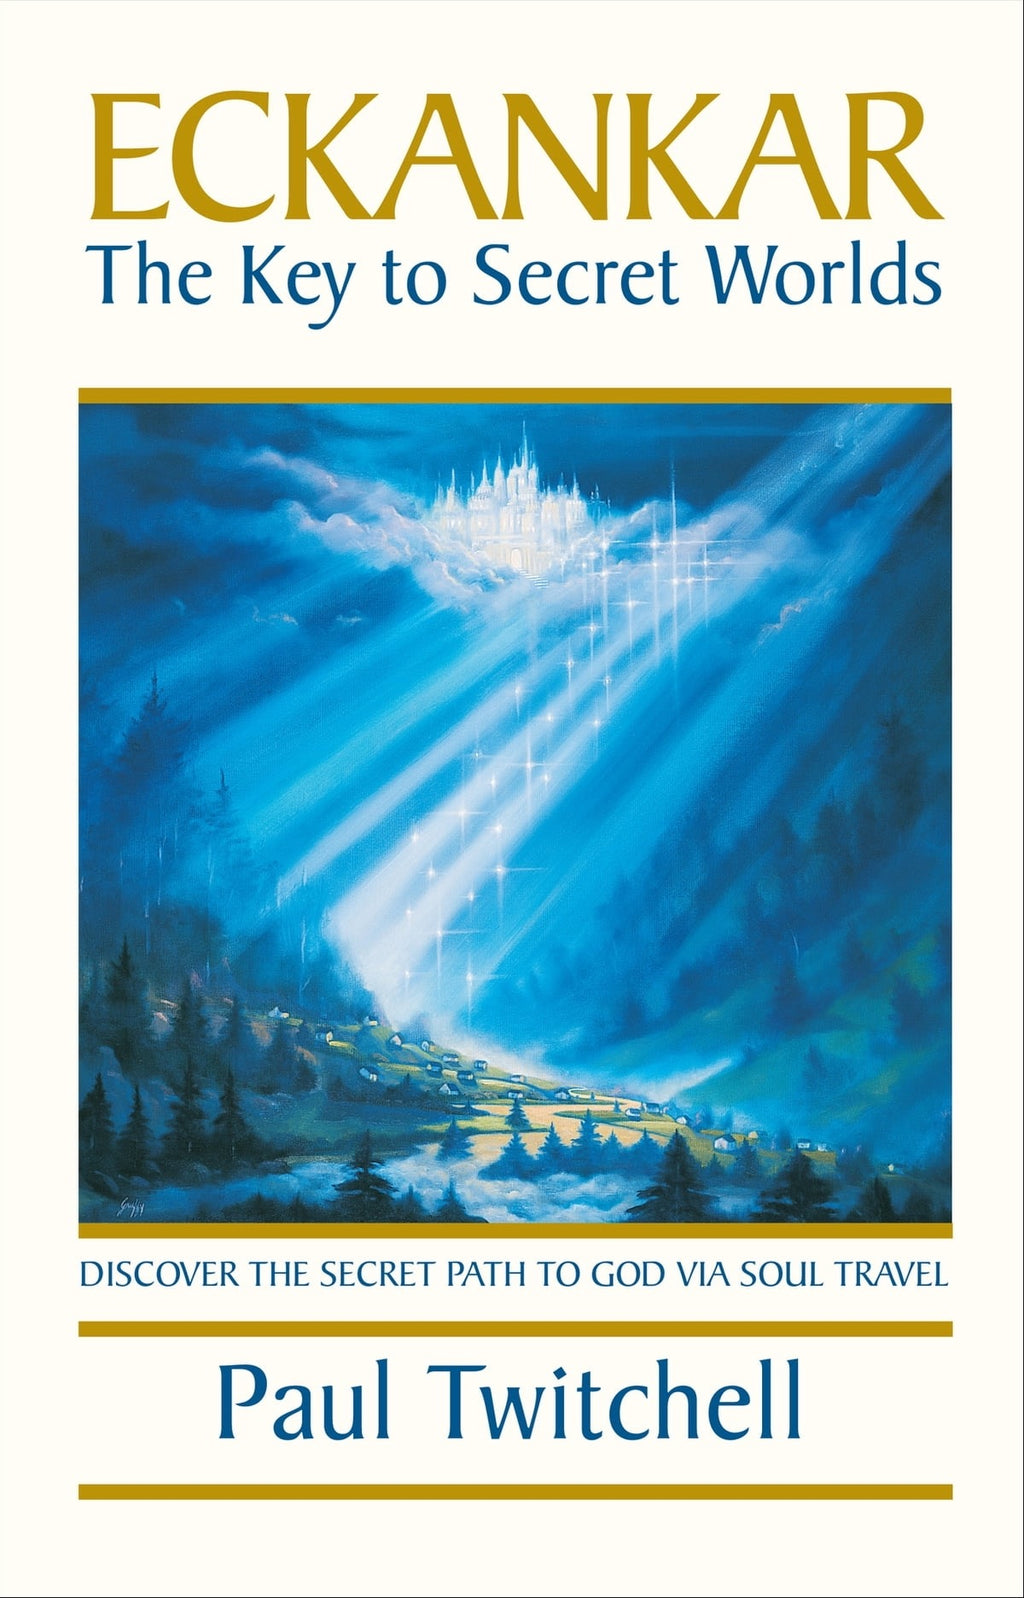 Eckankar--the key to secret worlds: 157043154X